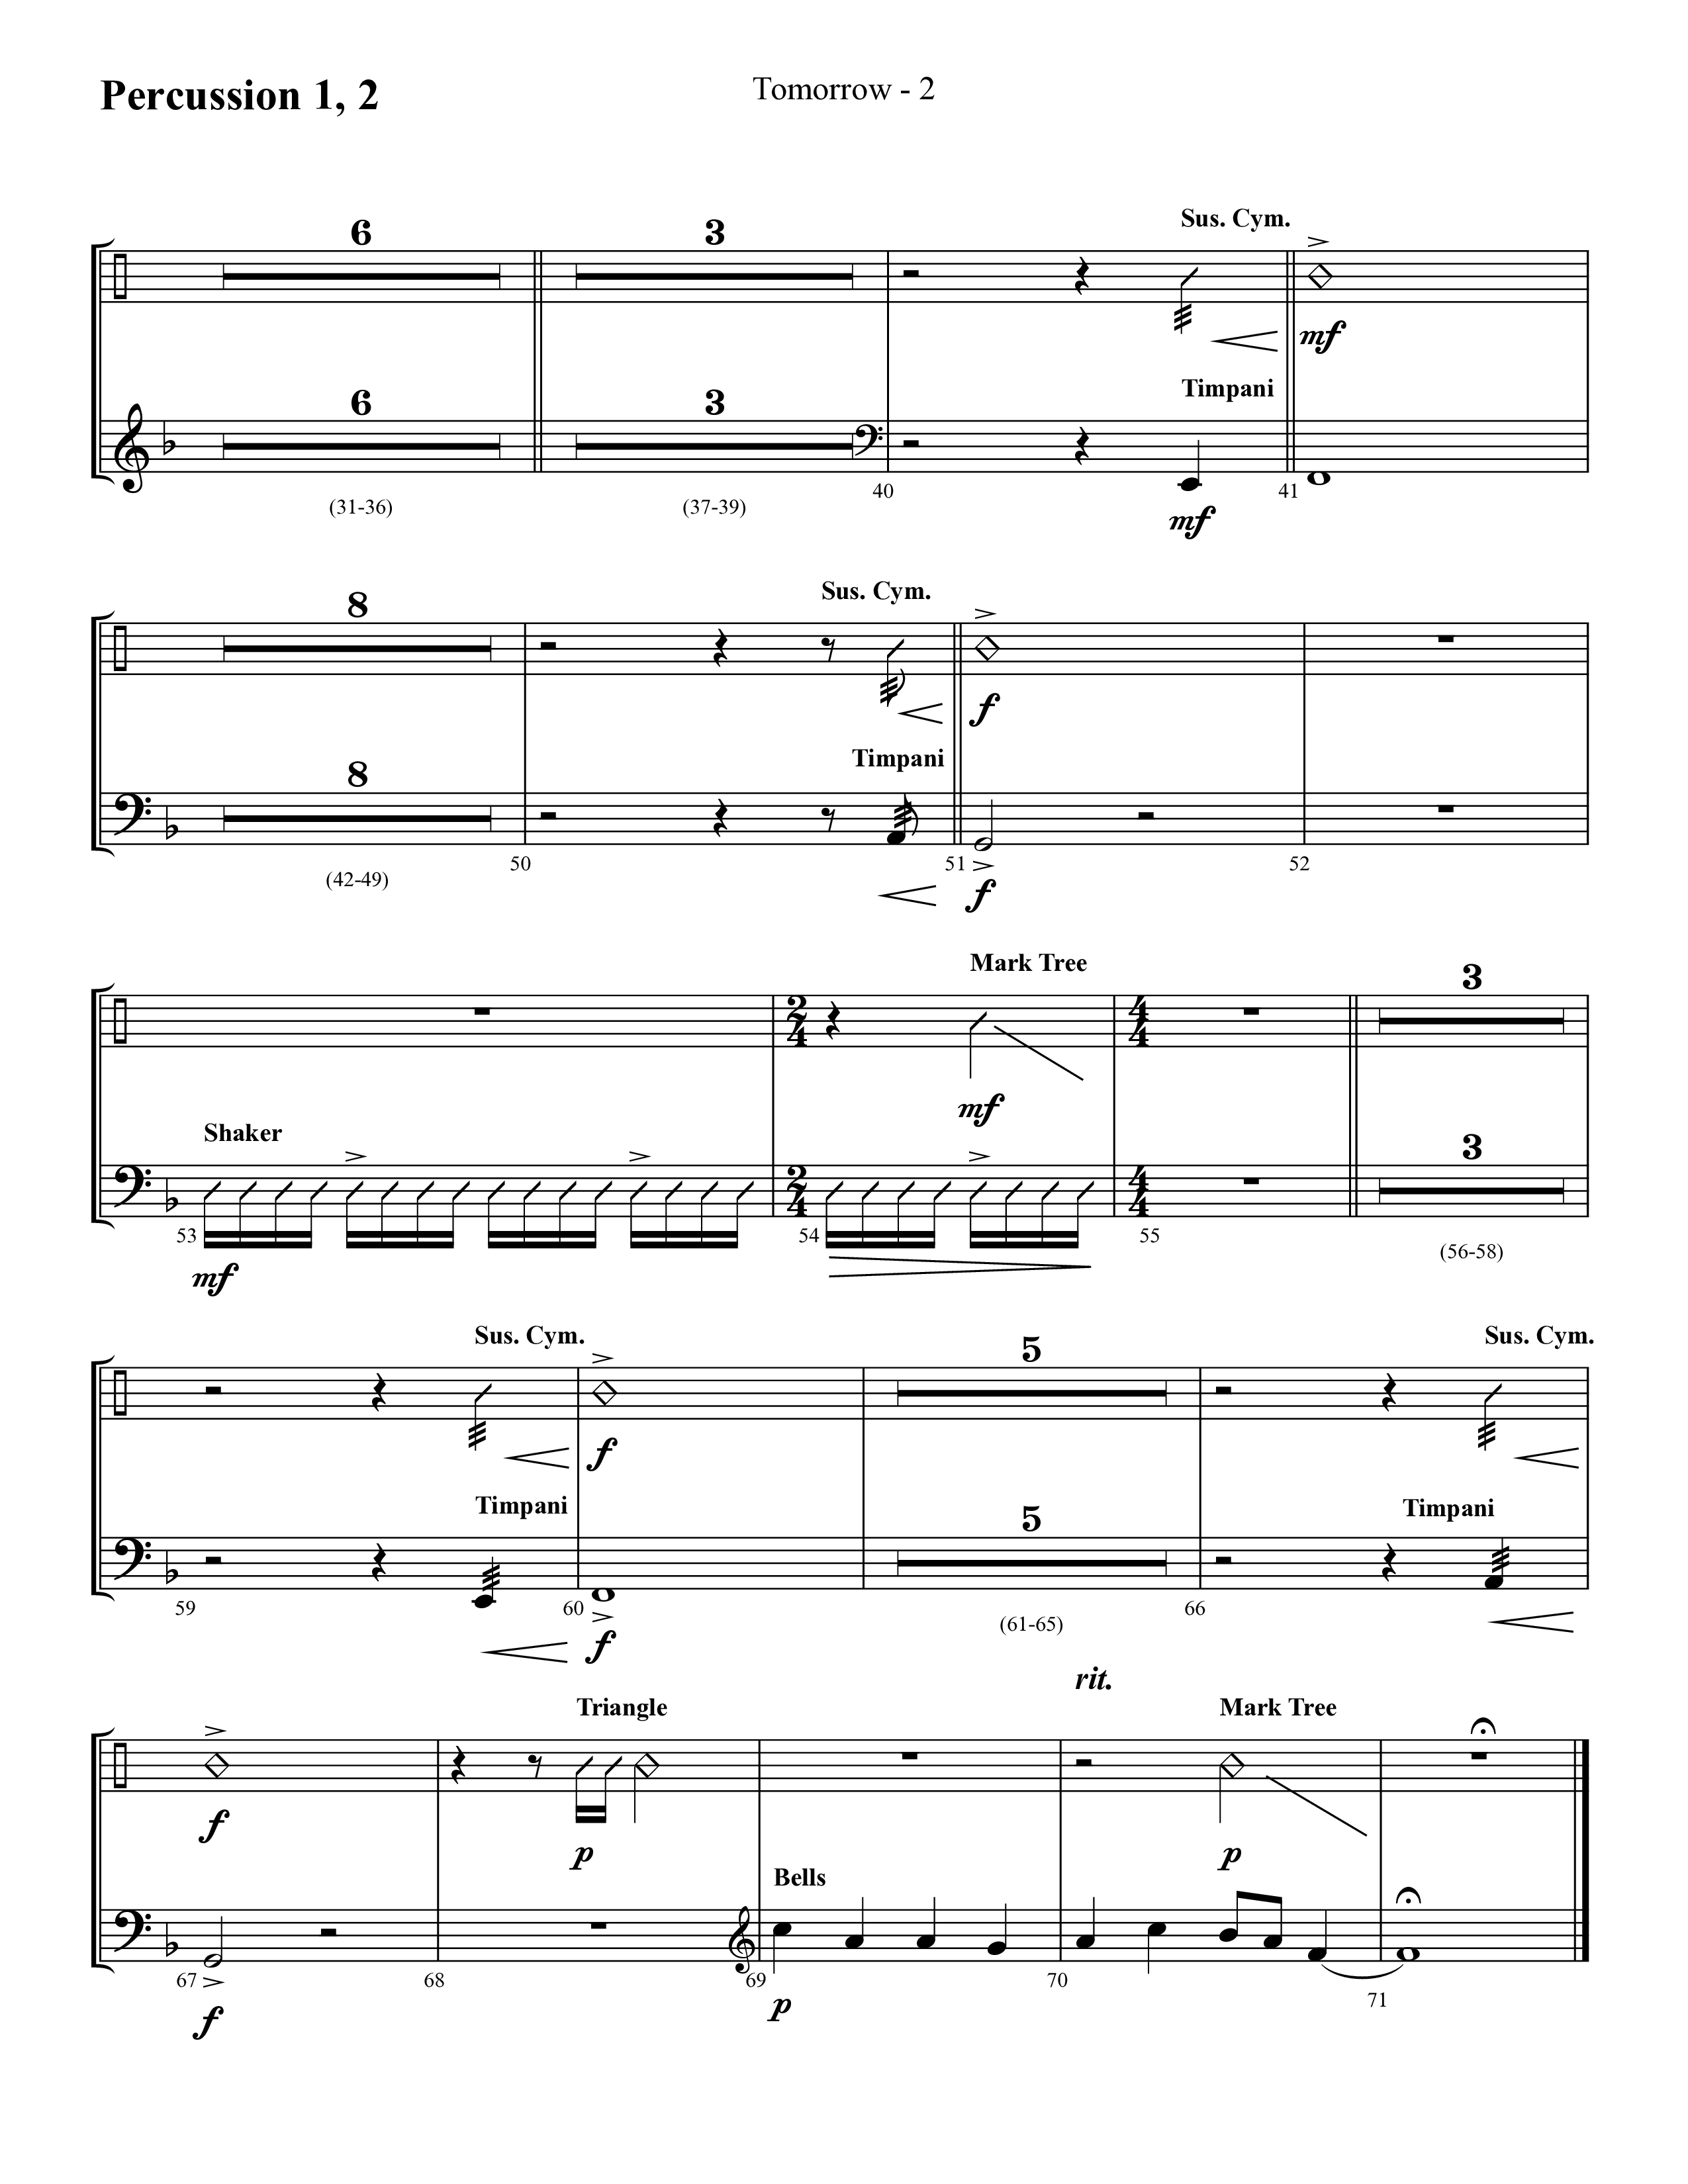 Tomorrow (Choral Anthem SATB) Percussion 1/2 (Lifeway Choral / Arr. Cliff Duren)